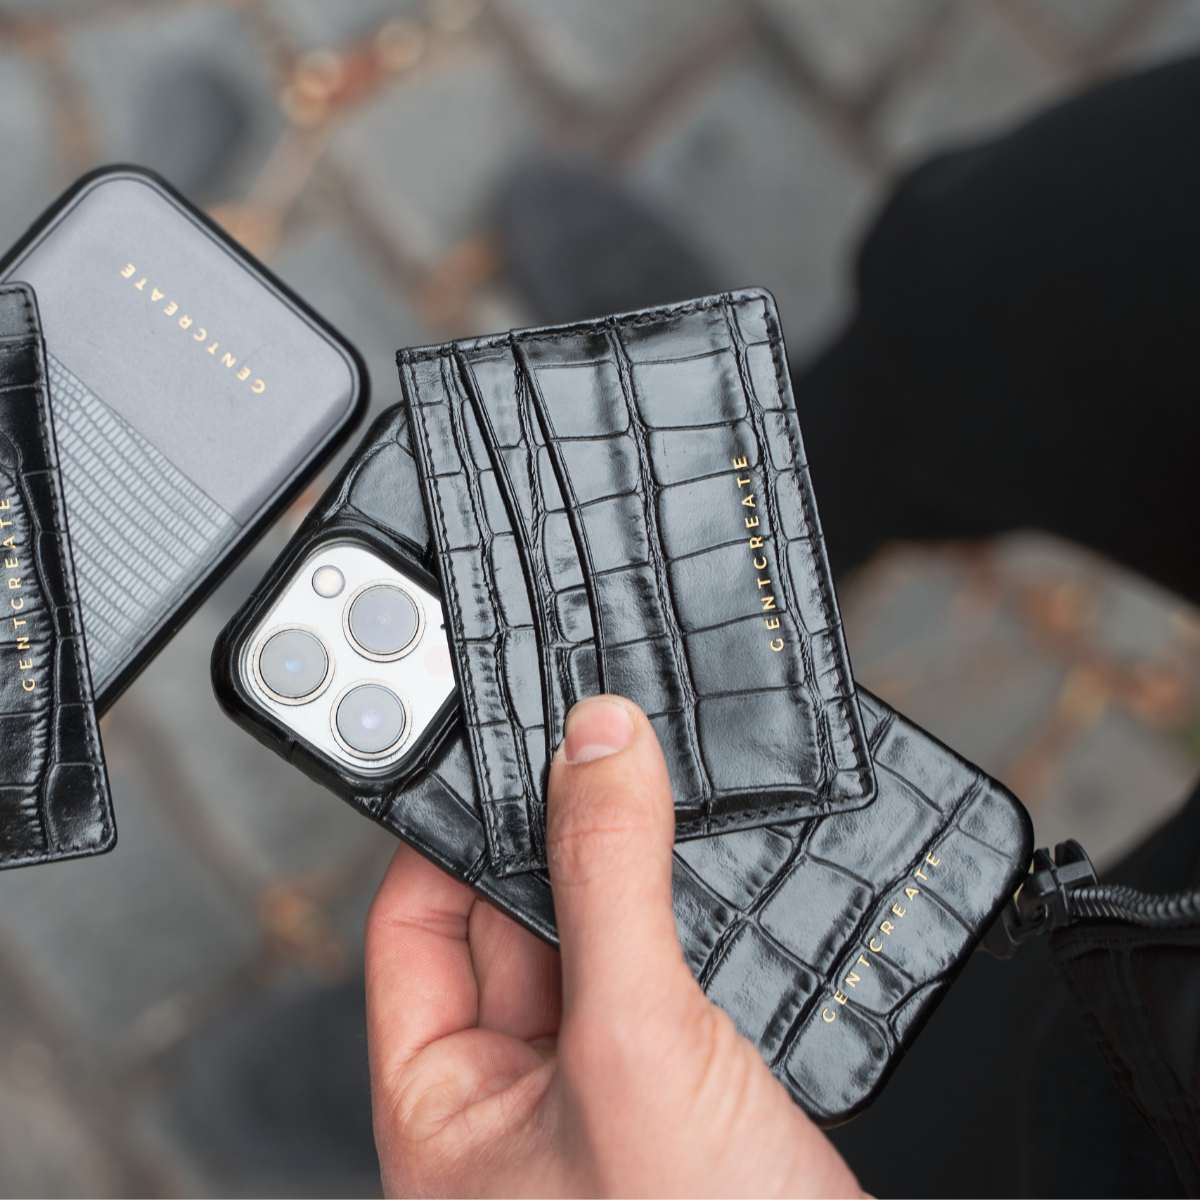 IPhone 12 Mini Black Croc Leather Personalised Phone Case 